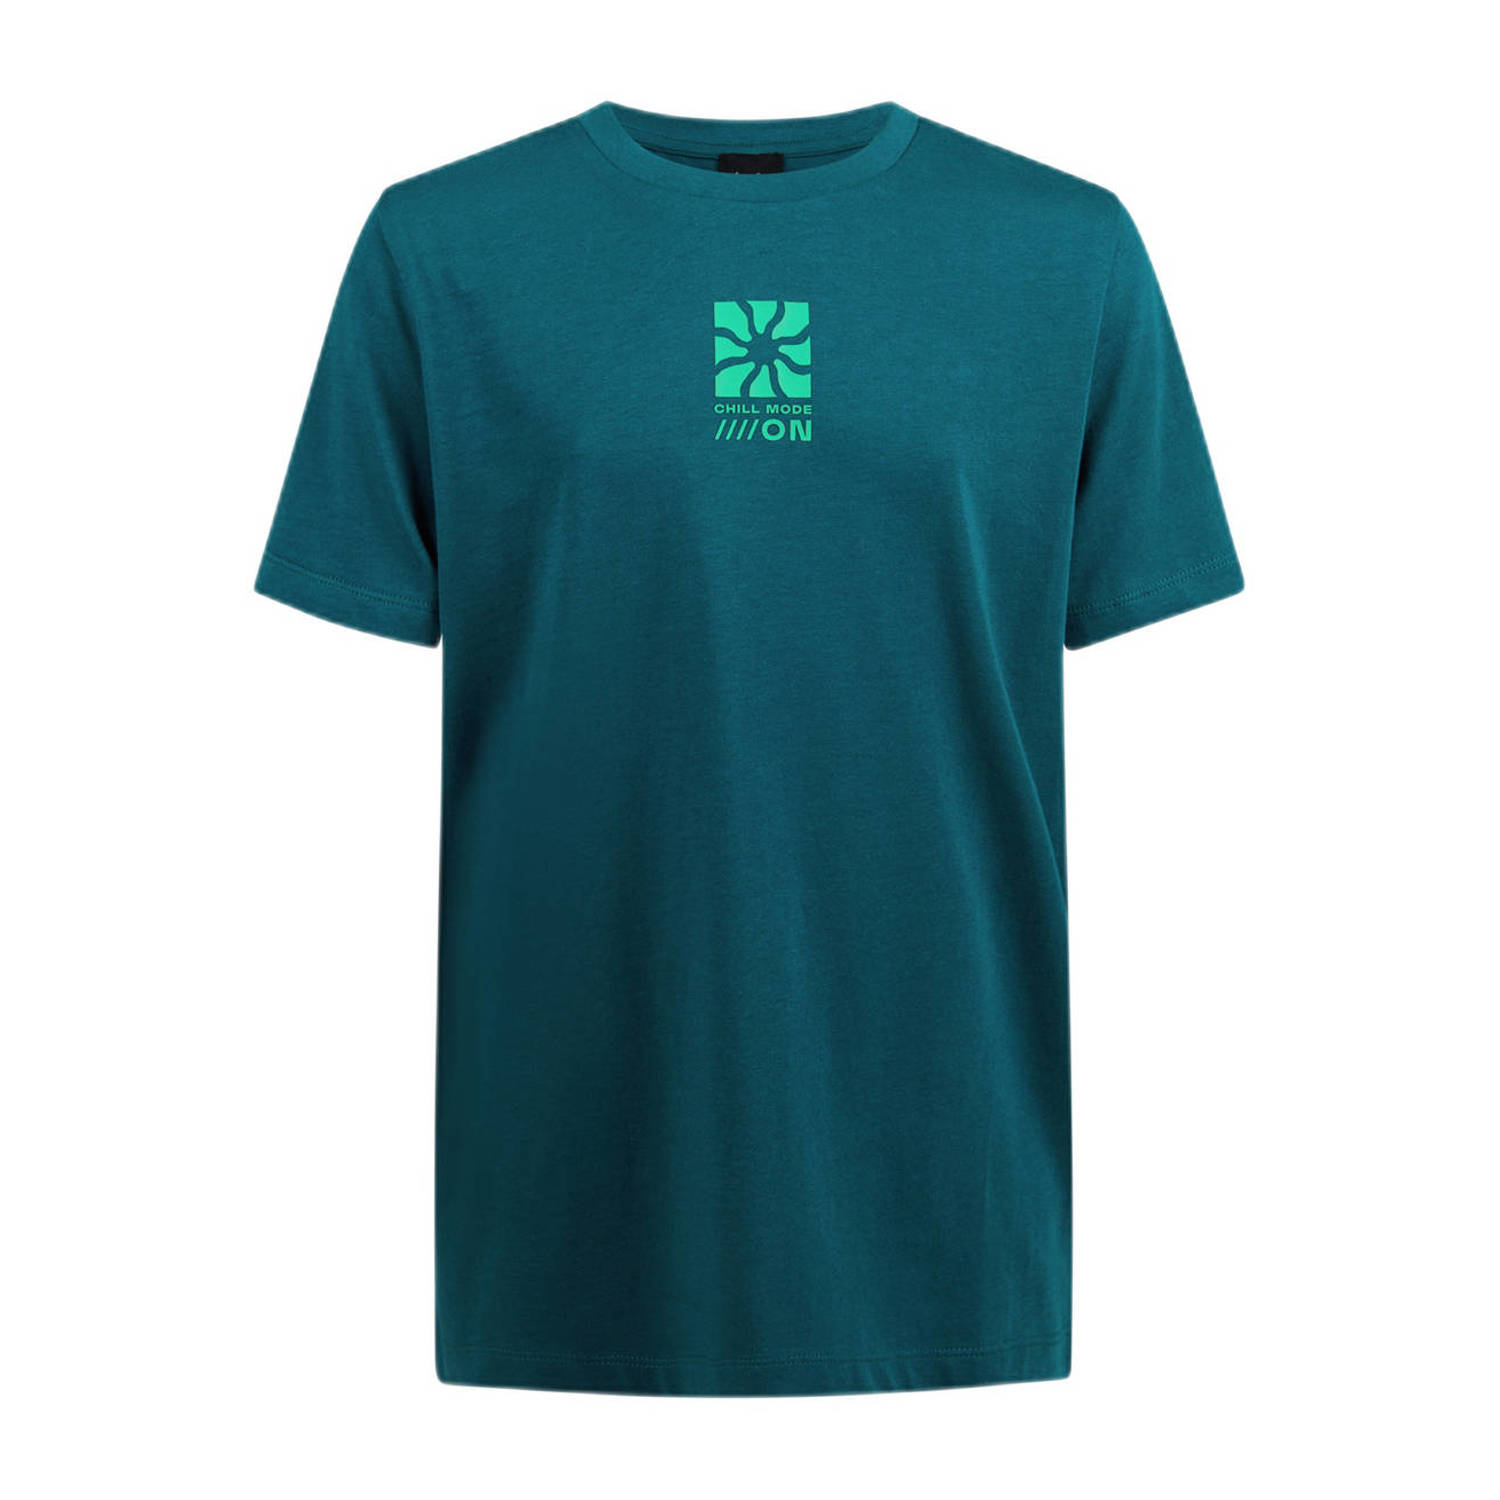 Shoeby T-shirt met printopdruk donkergroen